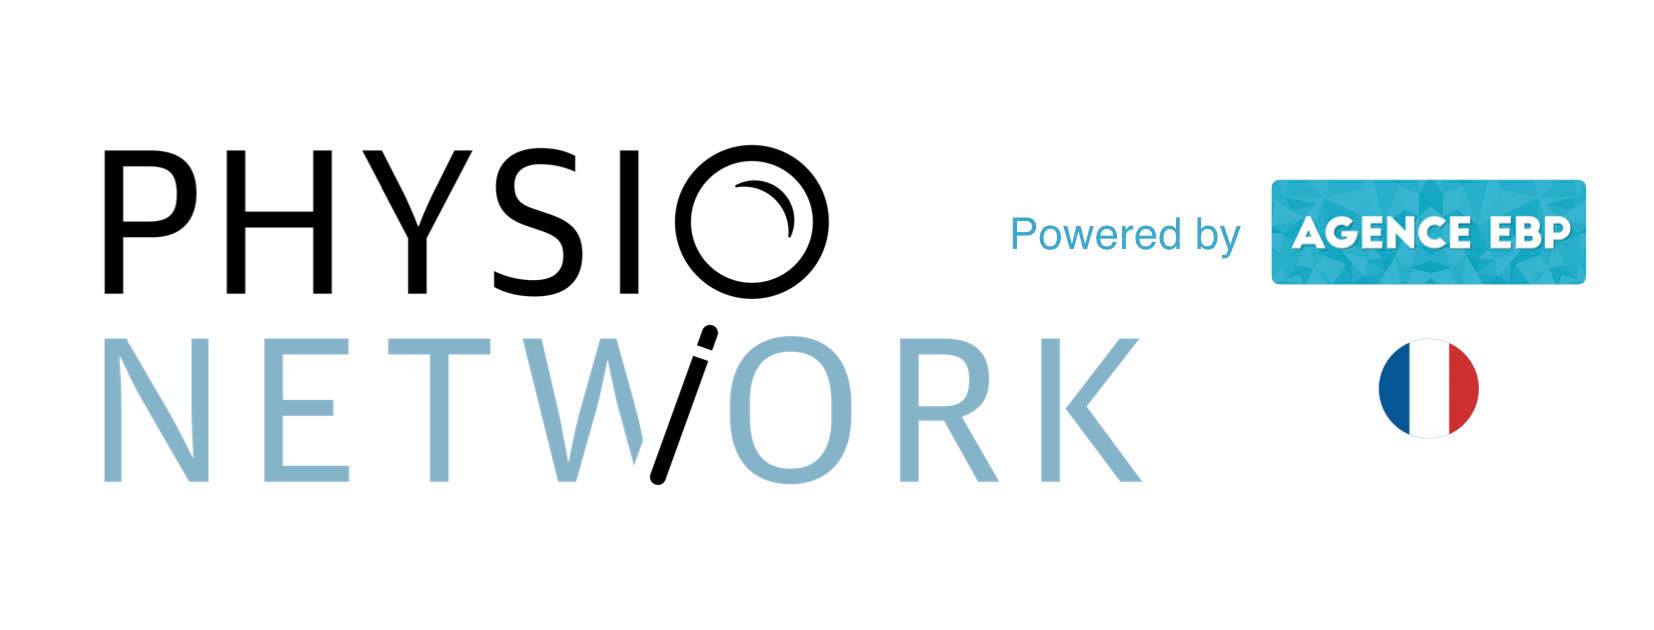 physio-network